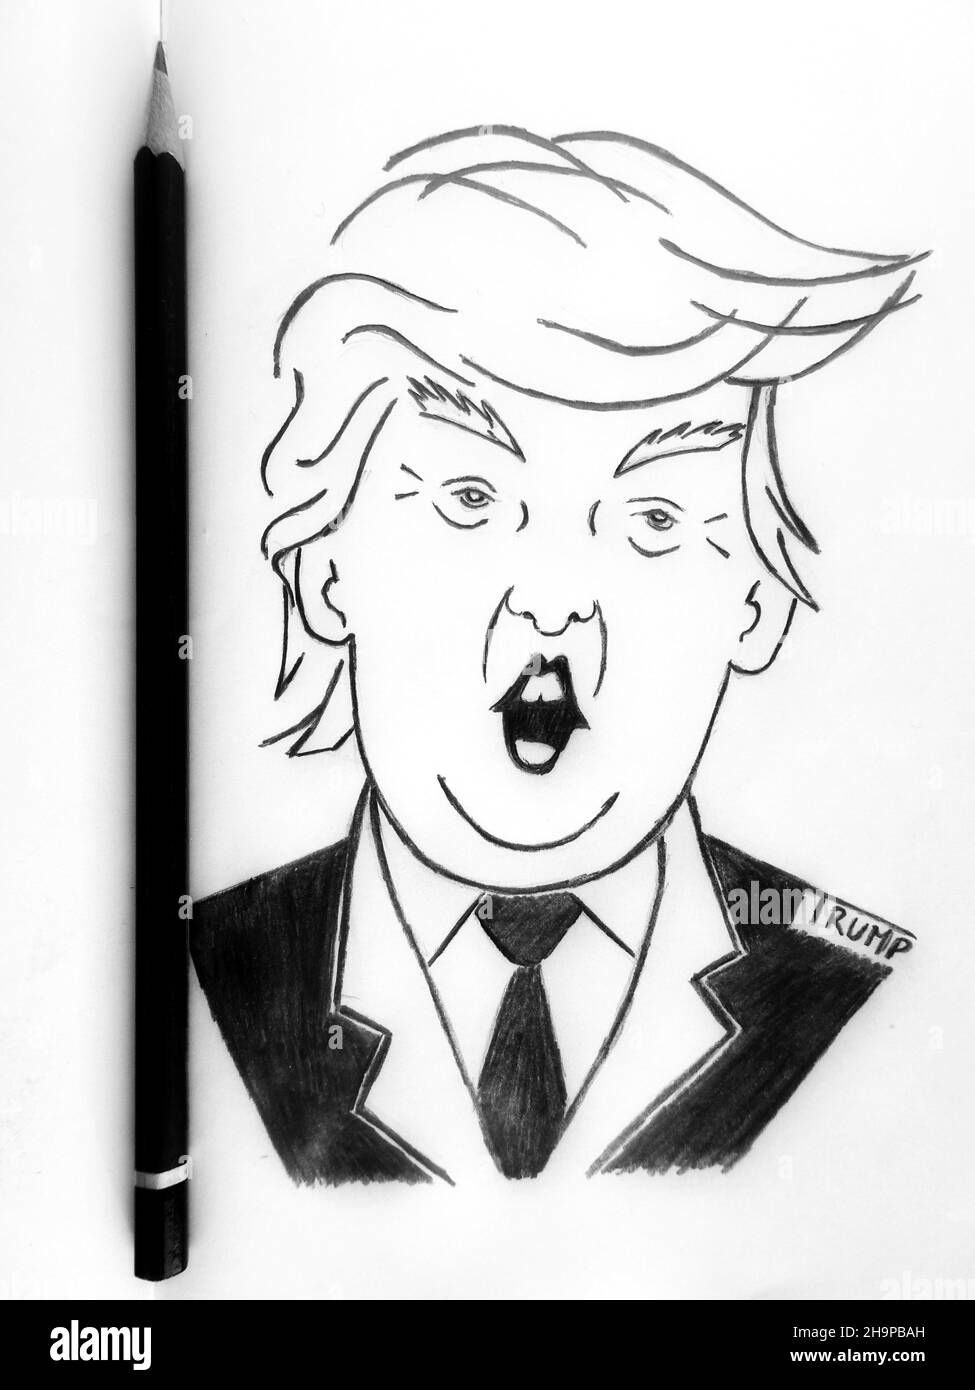 Hand drawn Donald Trump caricature Stock Photo